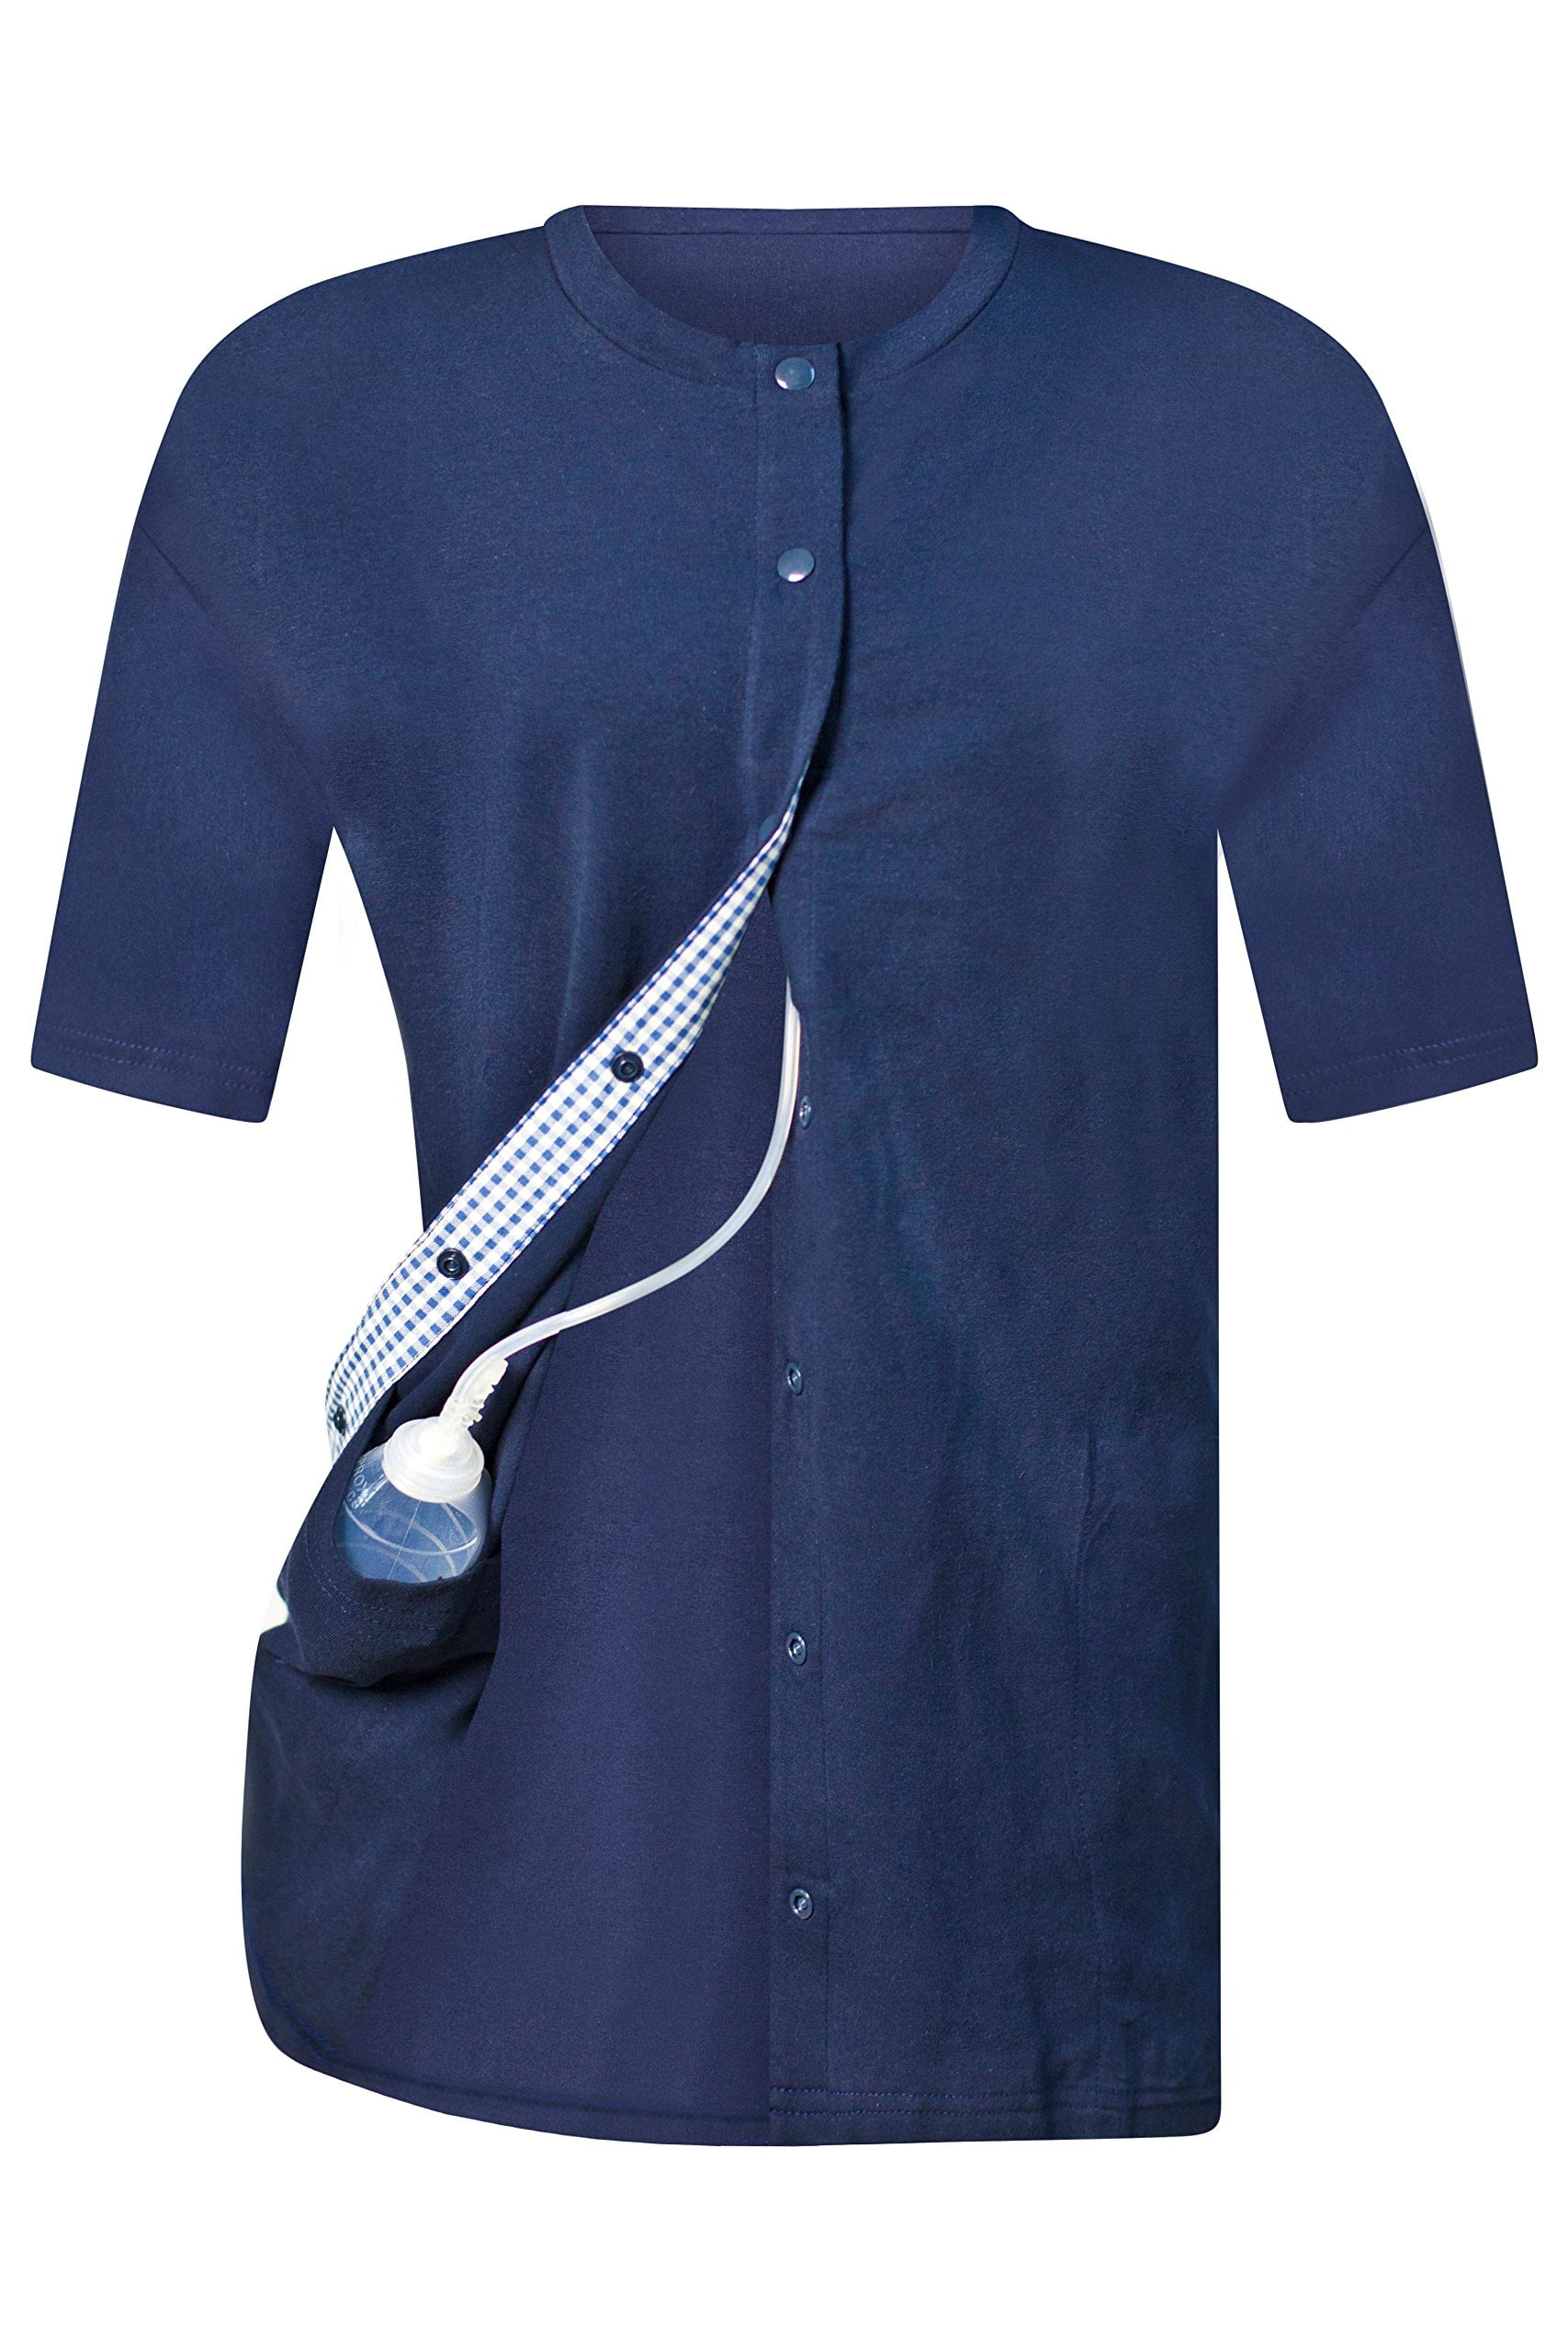 Aqua Breast Cancer Mastectomy Shirt W/drain Pockets, Mastectomy Drain Shirt,  Mastectomy Top, Breast Cancer T-shirt, Surgery Shirt & Gift 